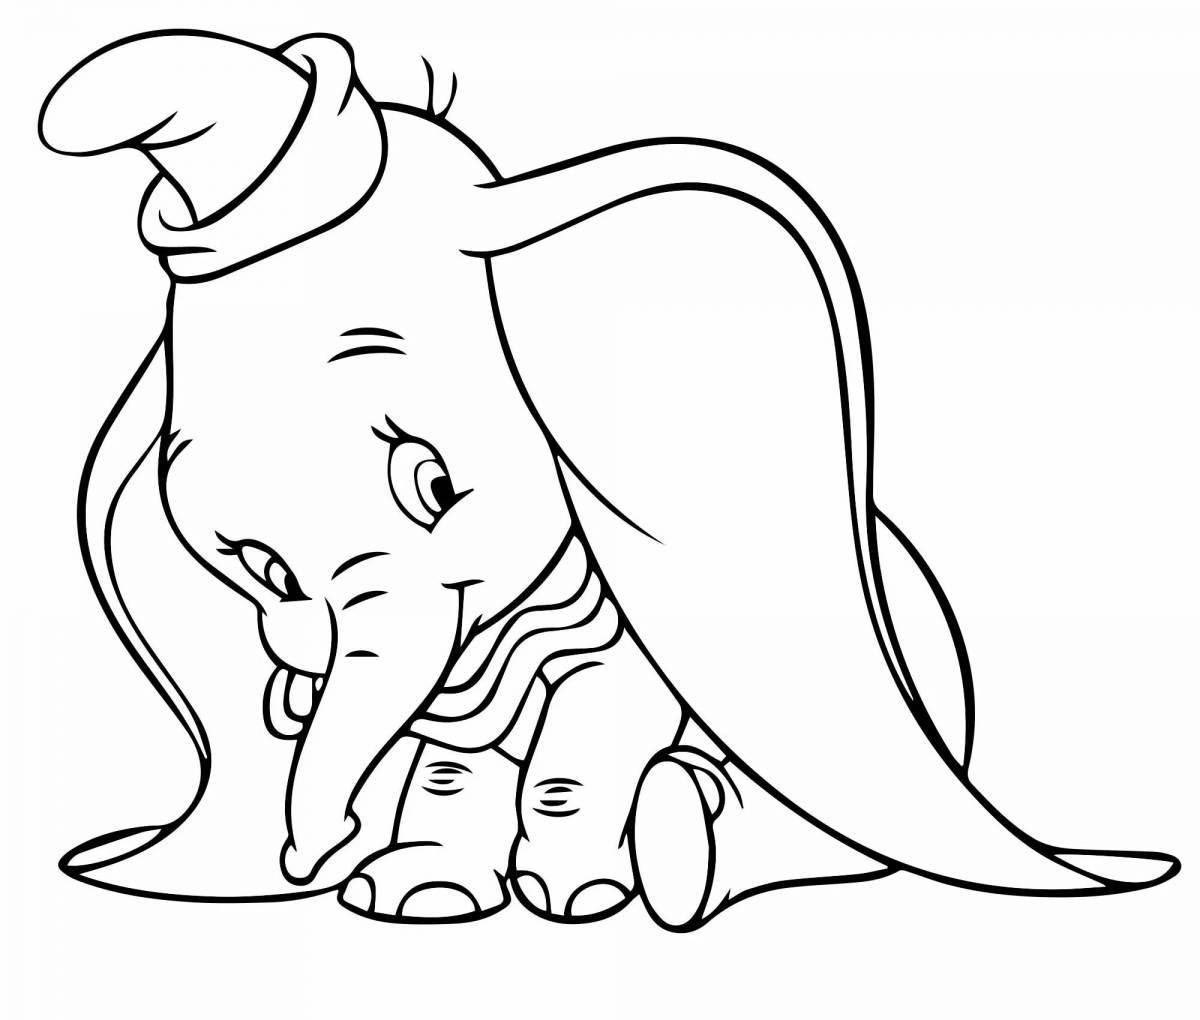 Colouring baby elephant Dumbo